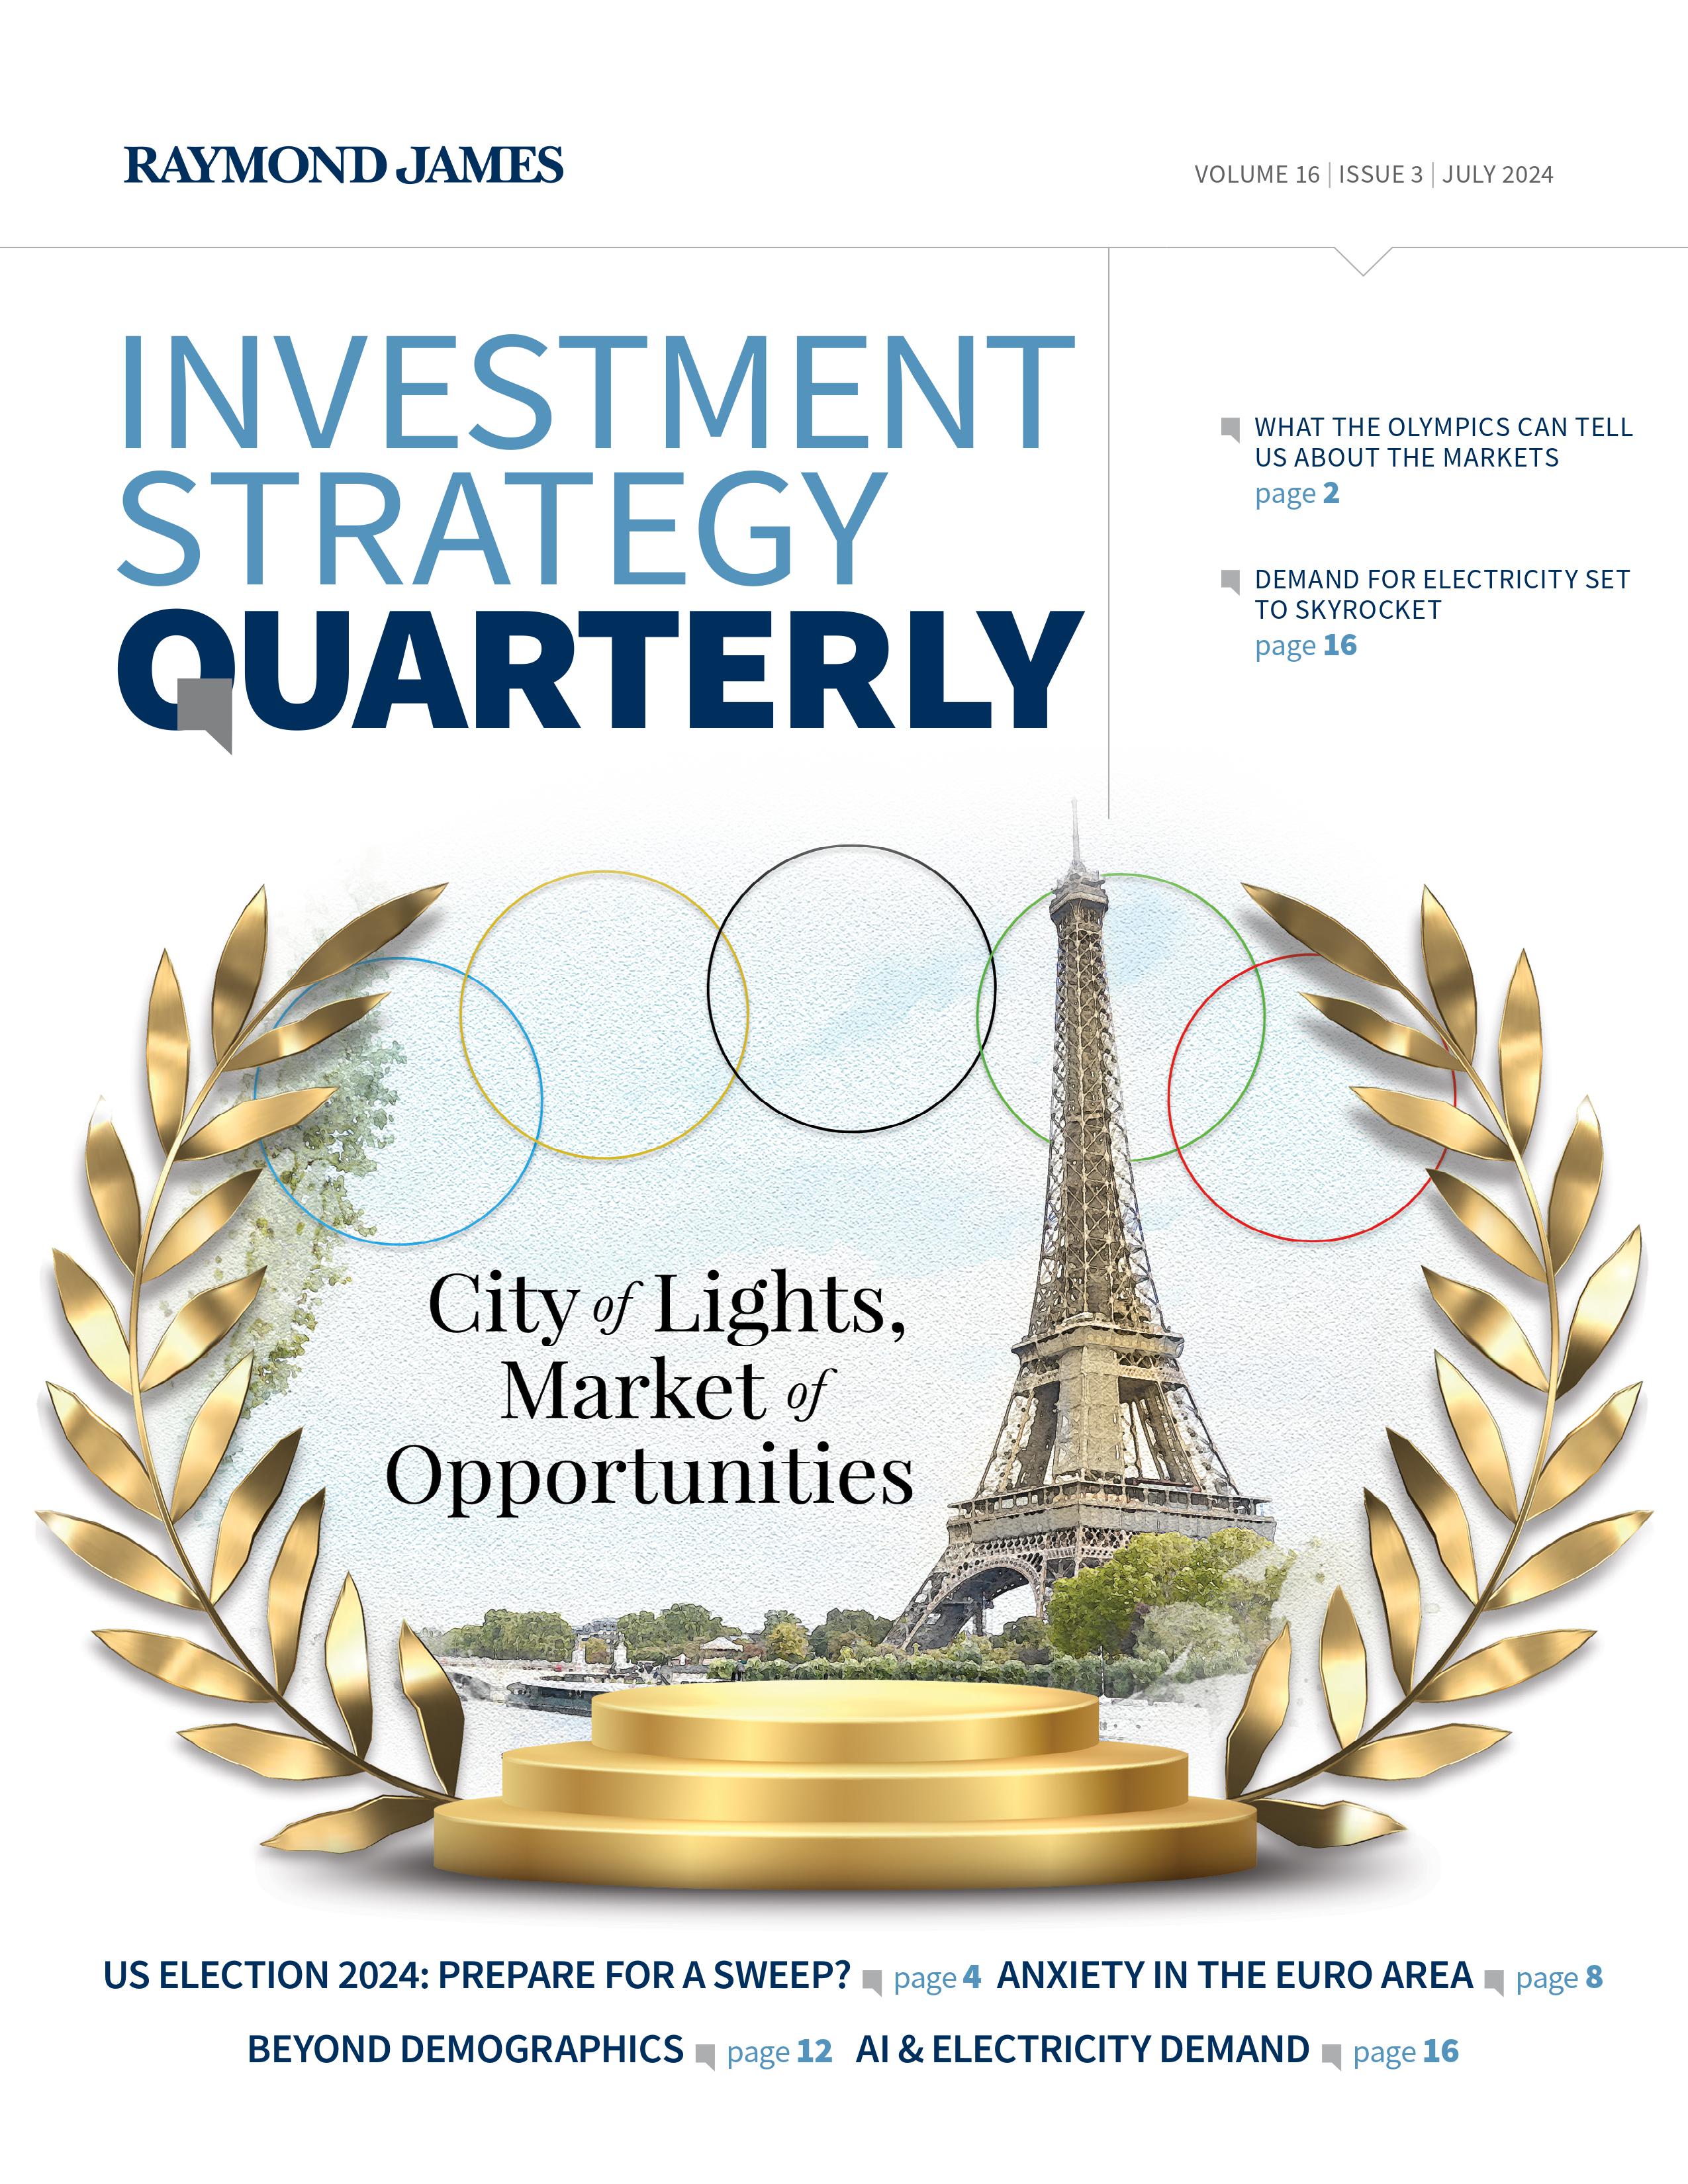 City of Lights, Market of Opportunities